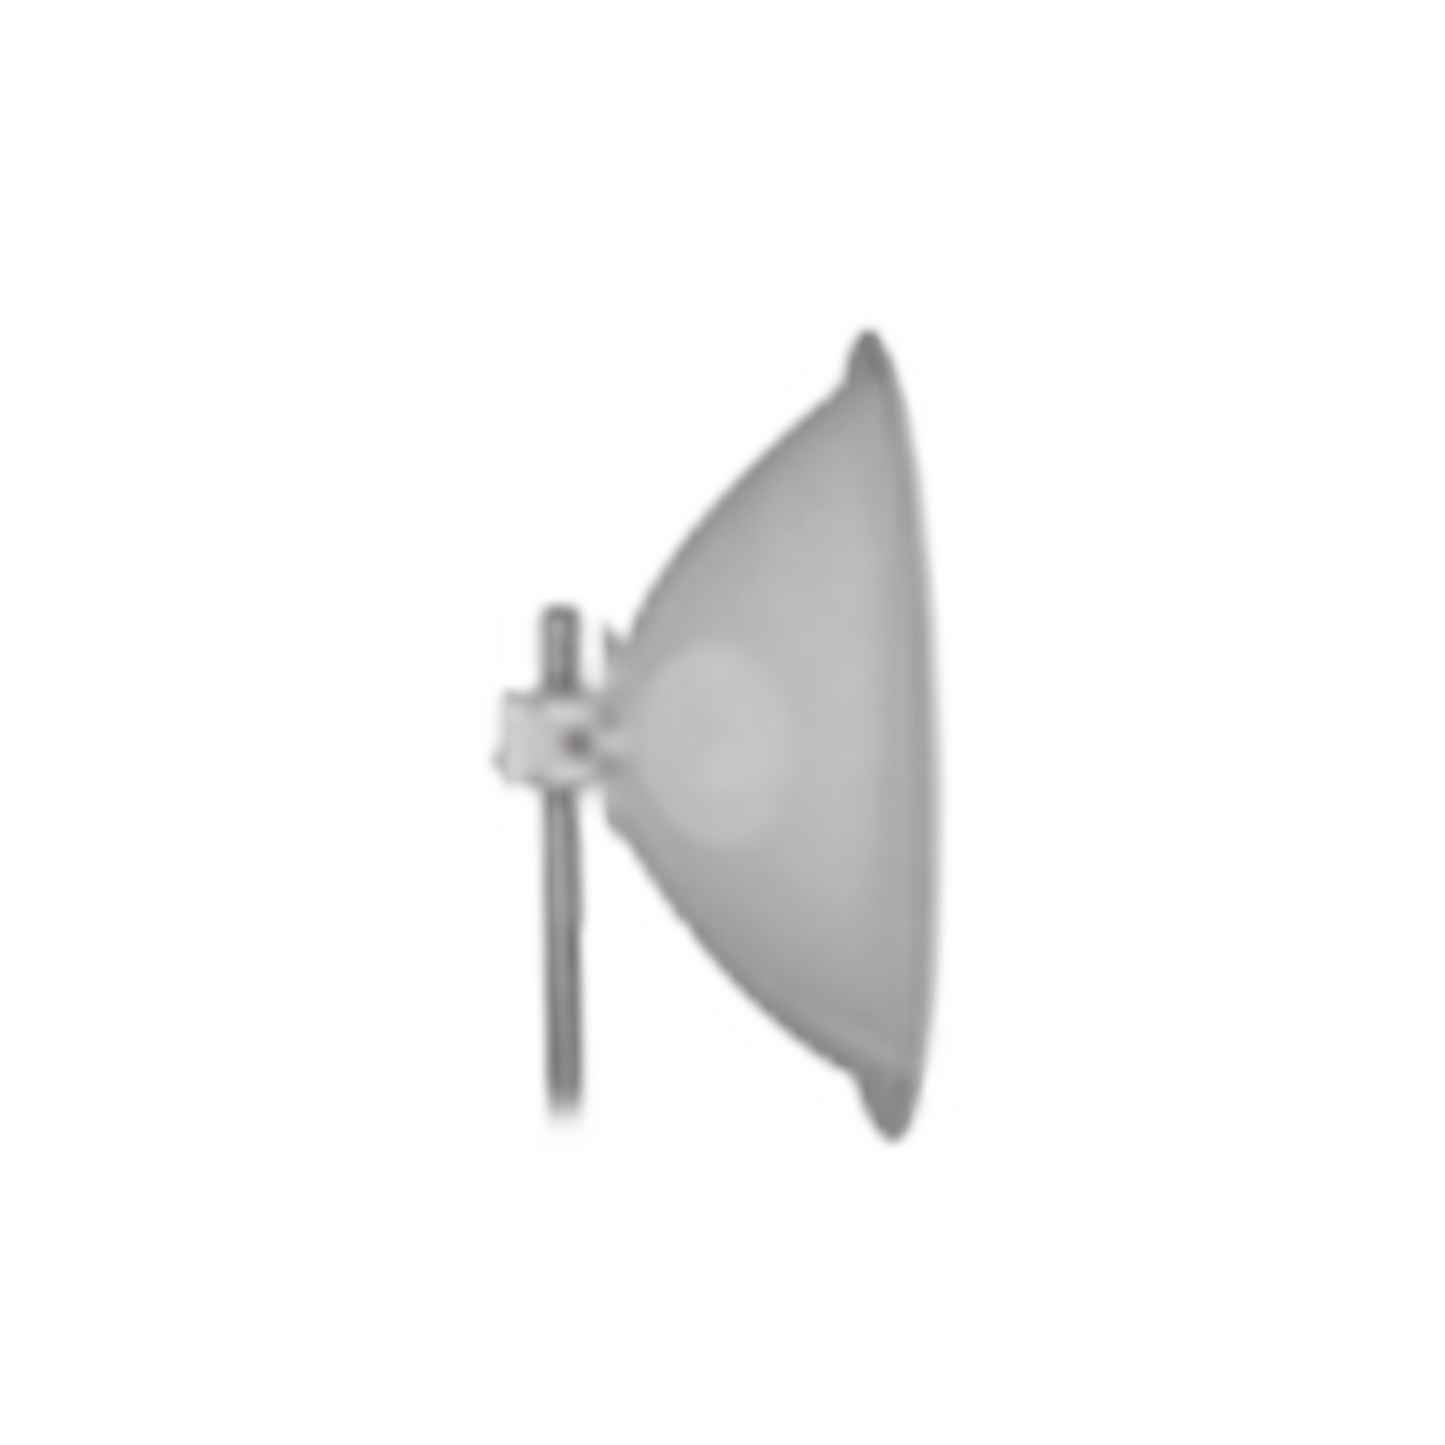 Dish Antenna for B11 Radio, Circular Connector, 10.1 ~ 11.7 GHz, 2.95 ft (0.9 m) Diameter